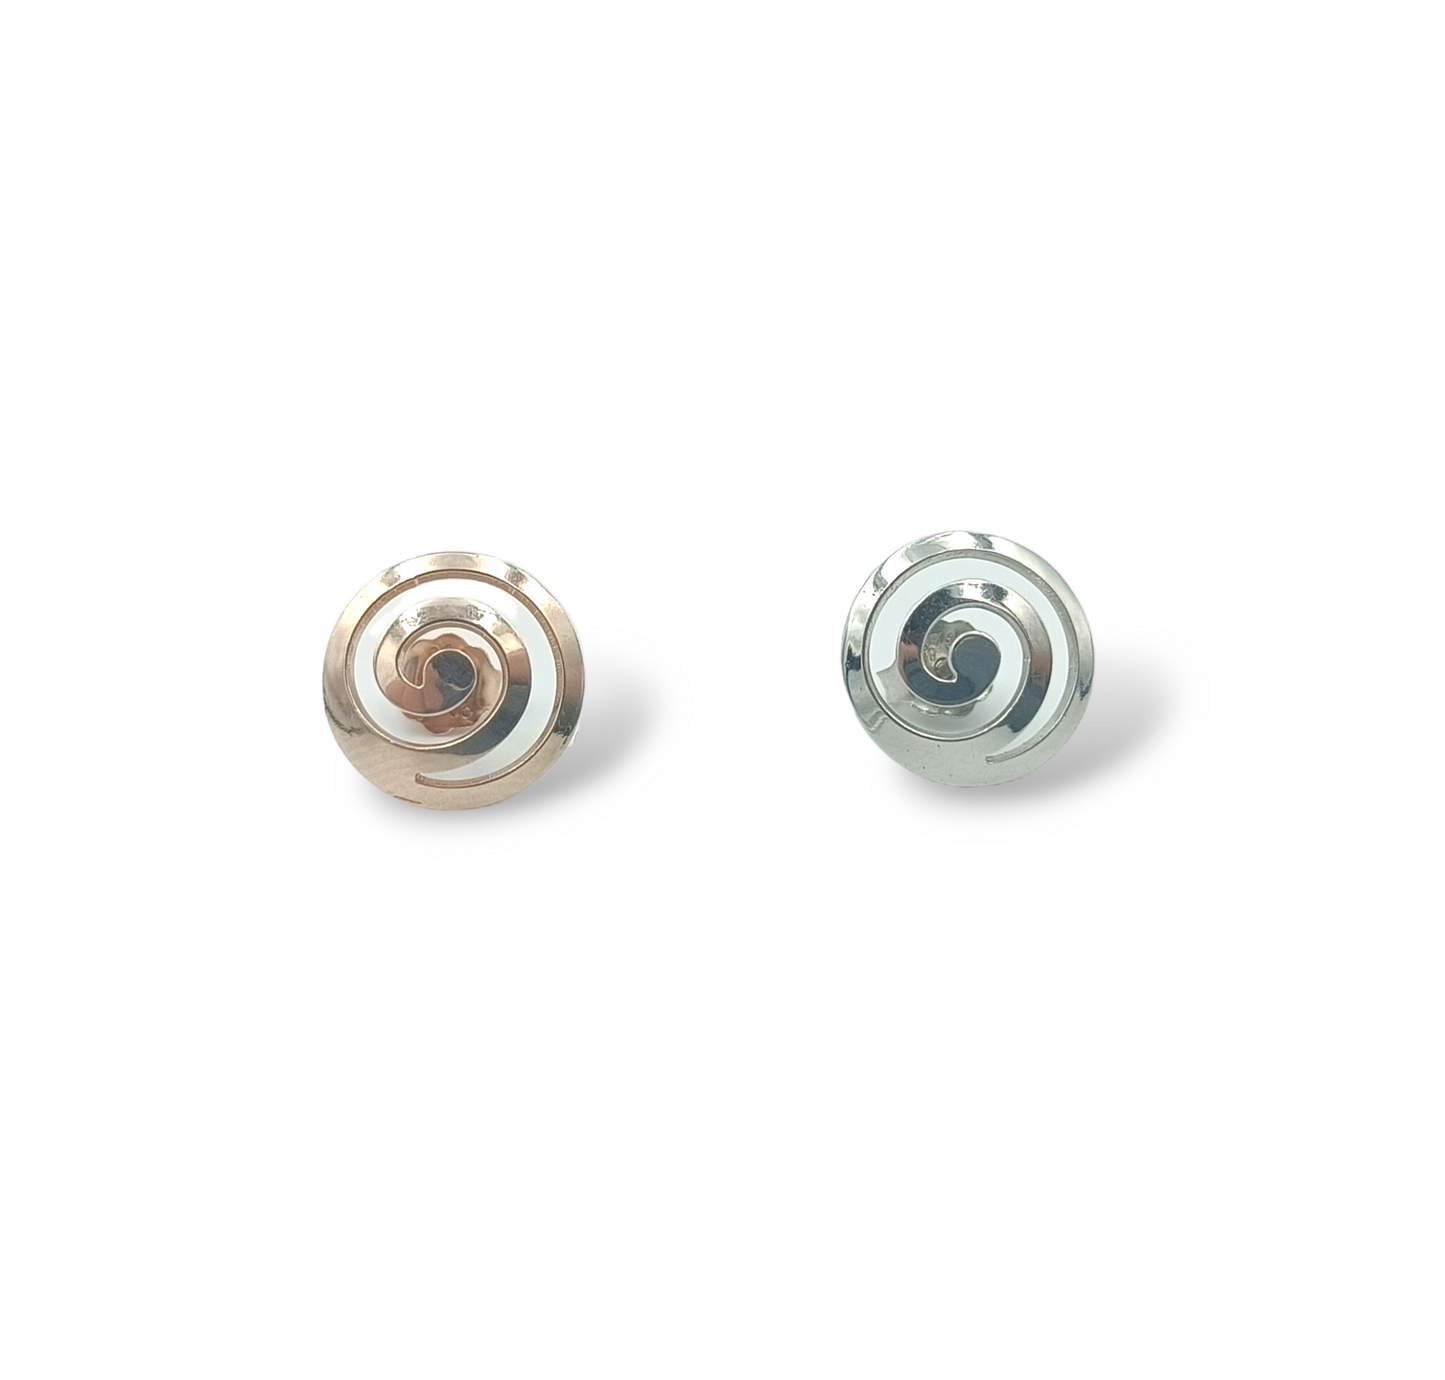 Silver Spiral design earrings